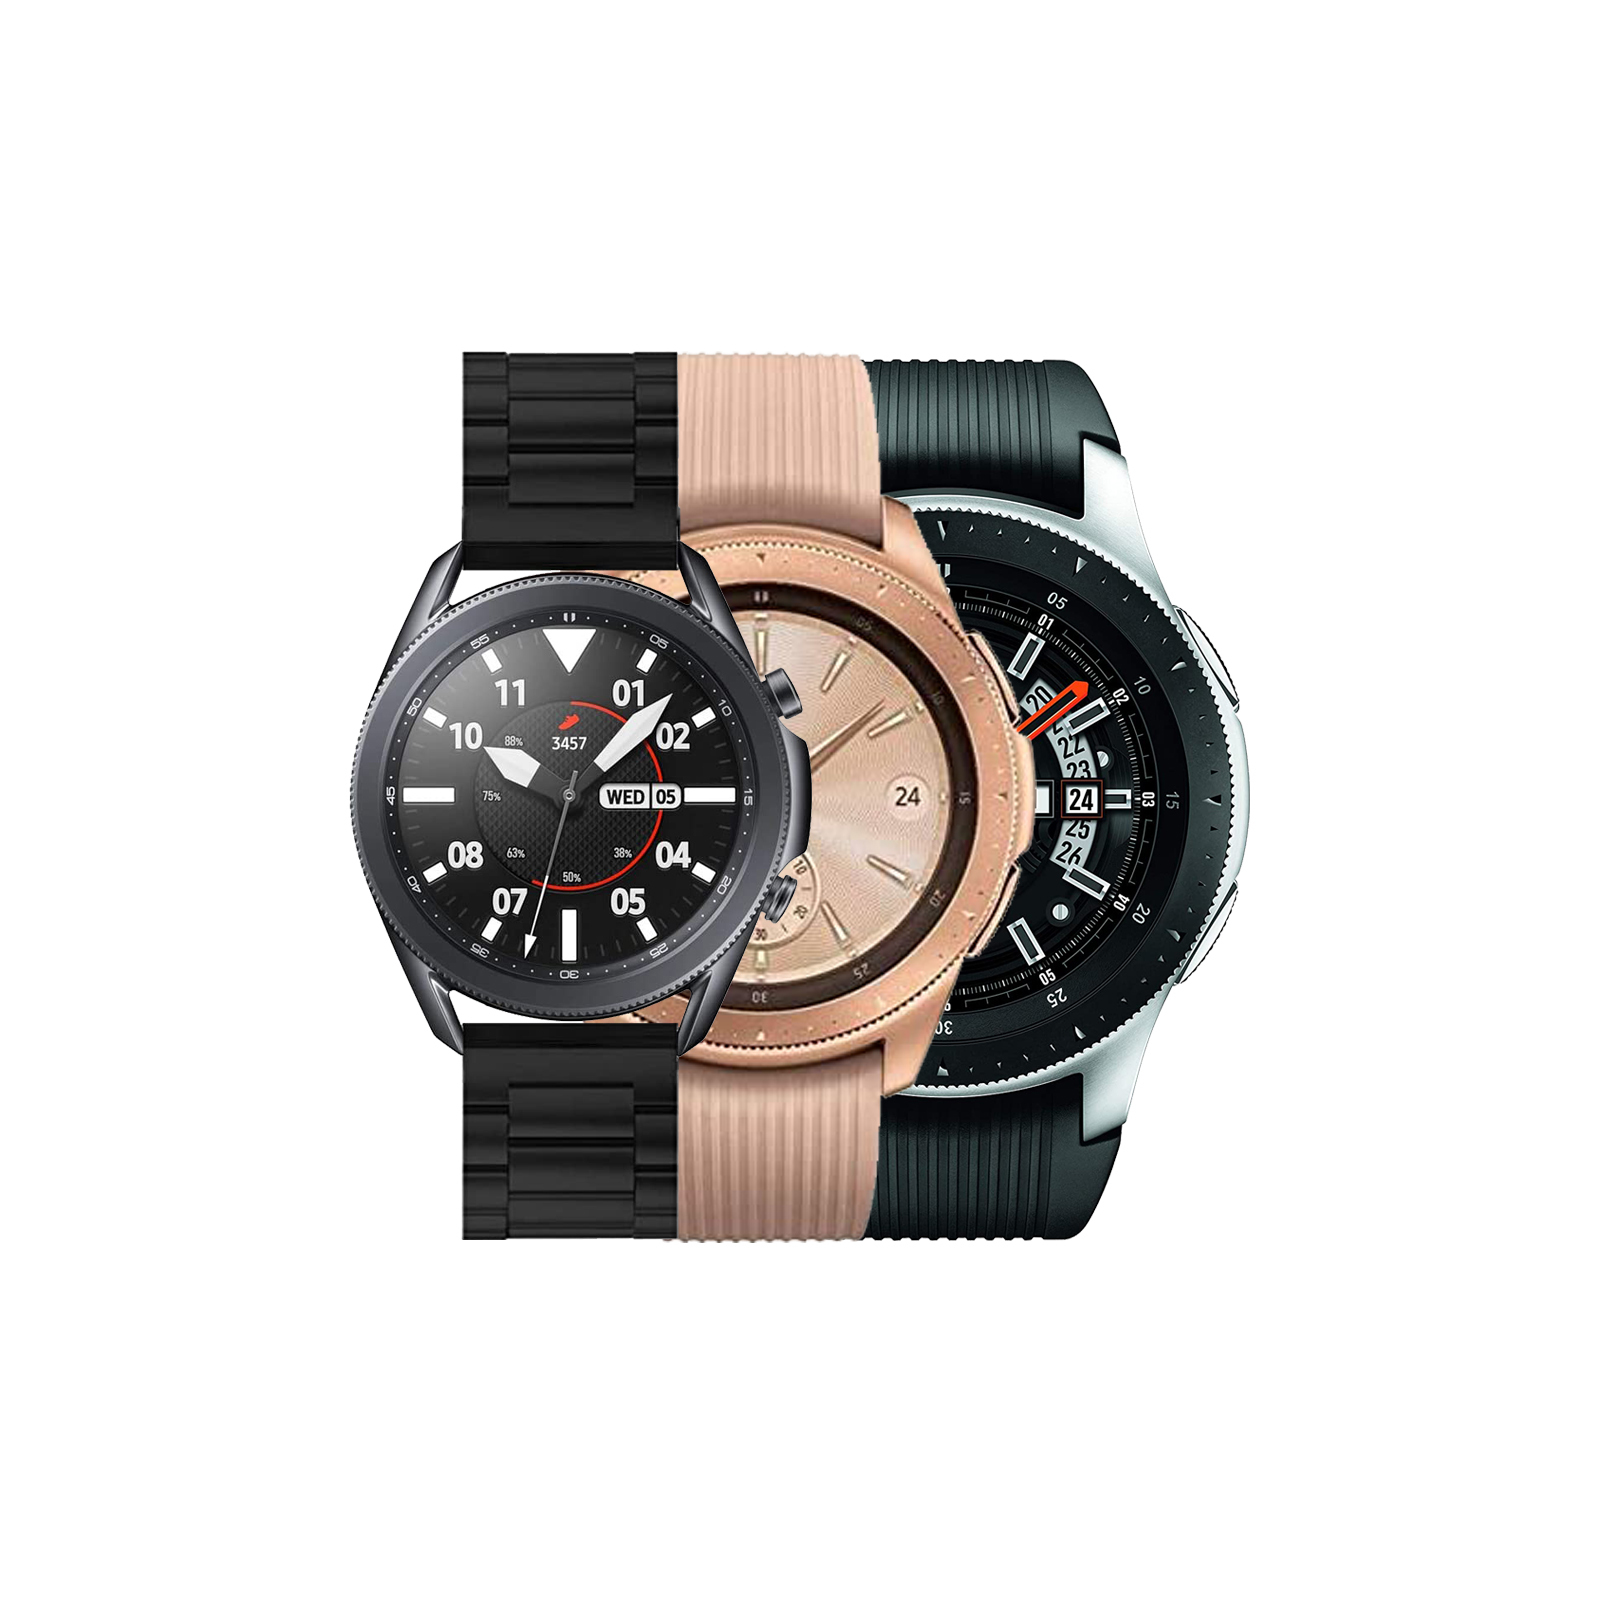 Samsung Galaxy Watch 4G 46mm - Good Condition